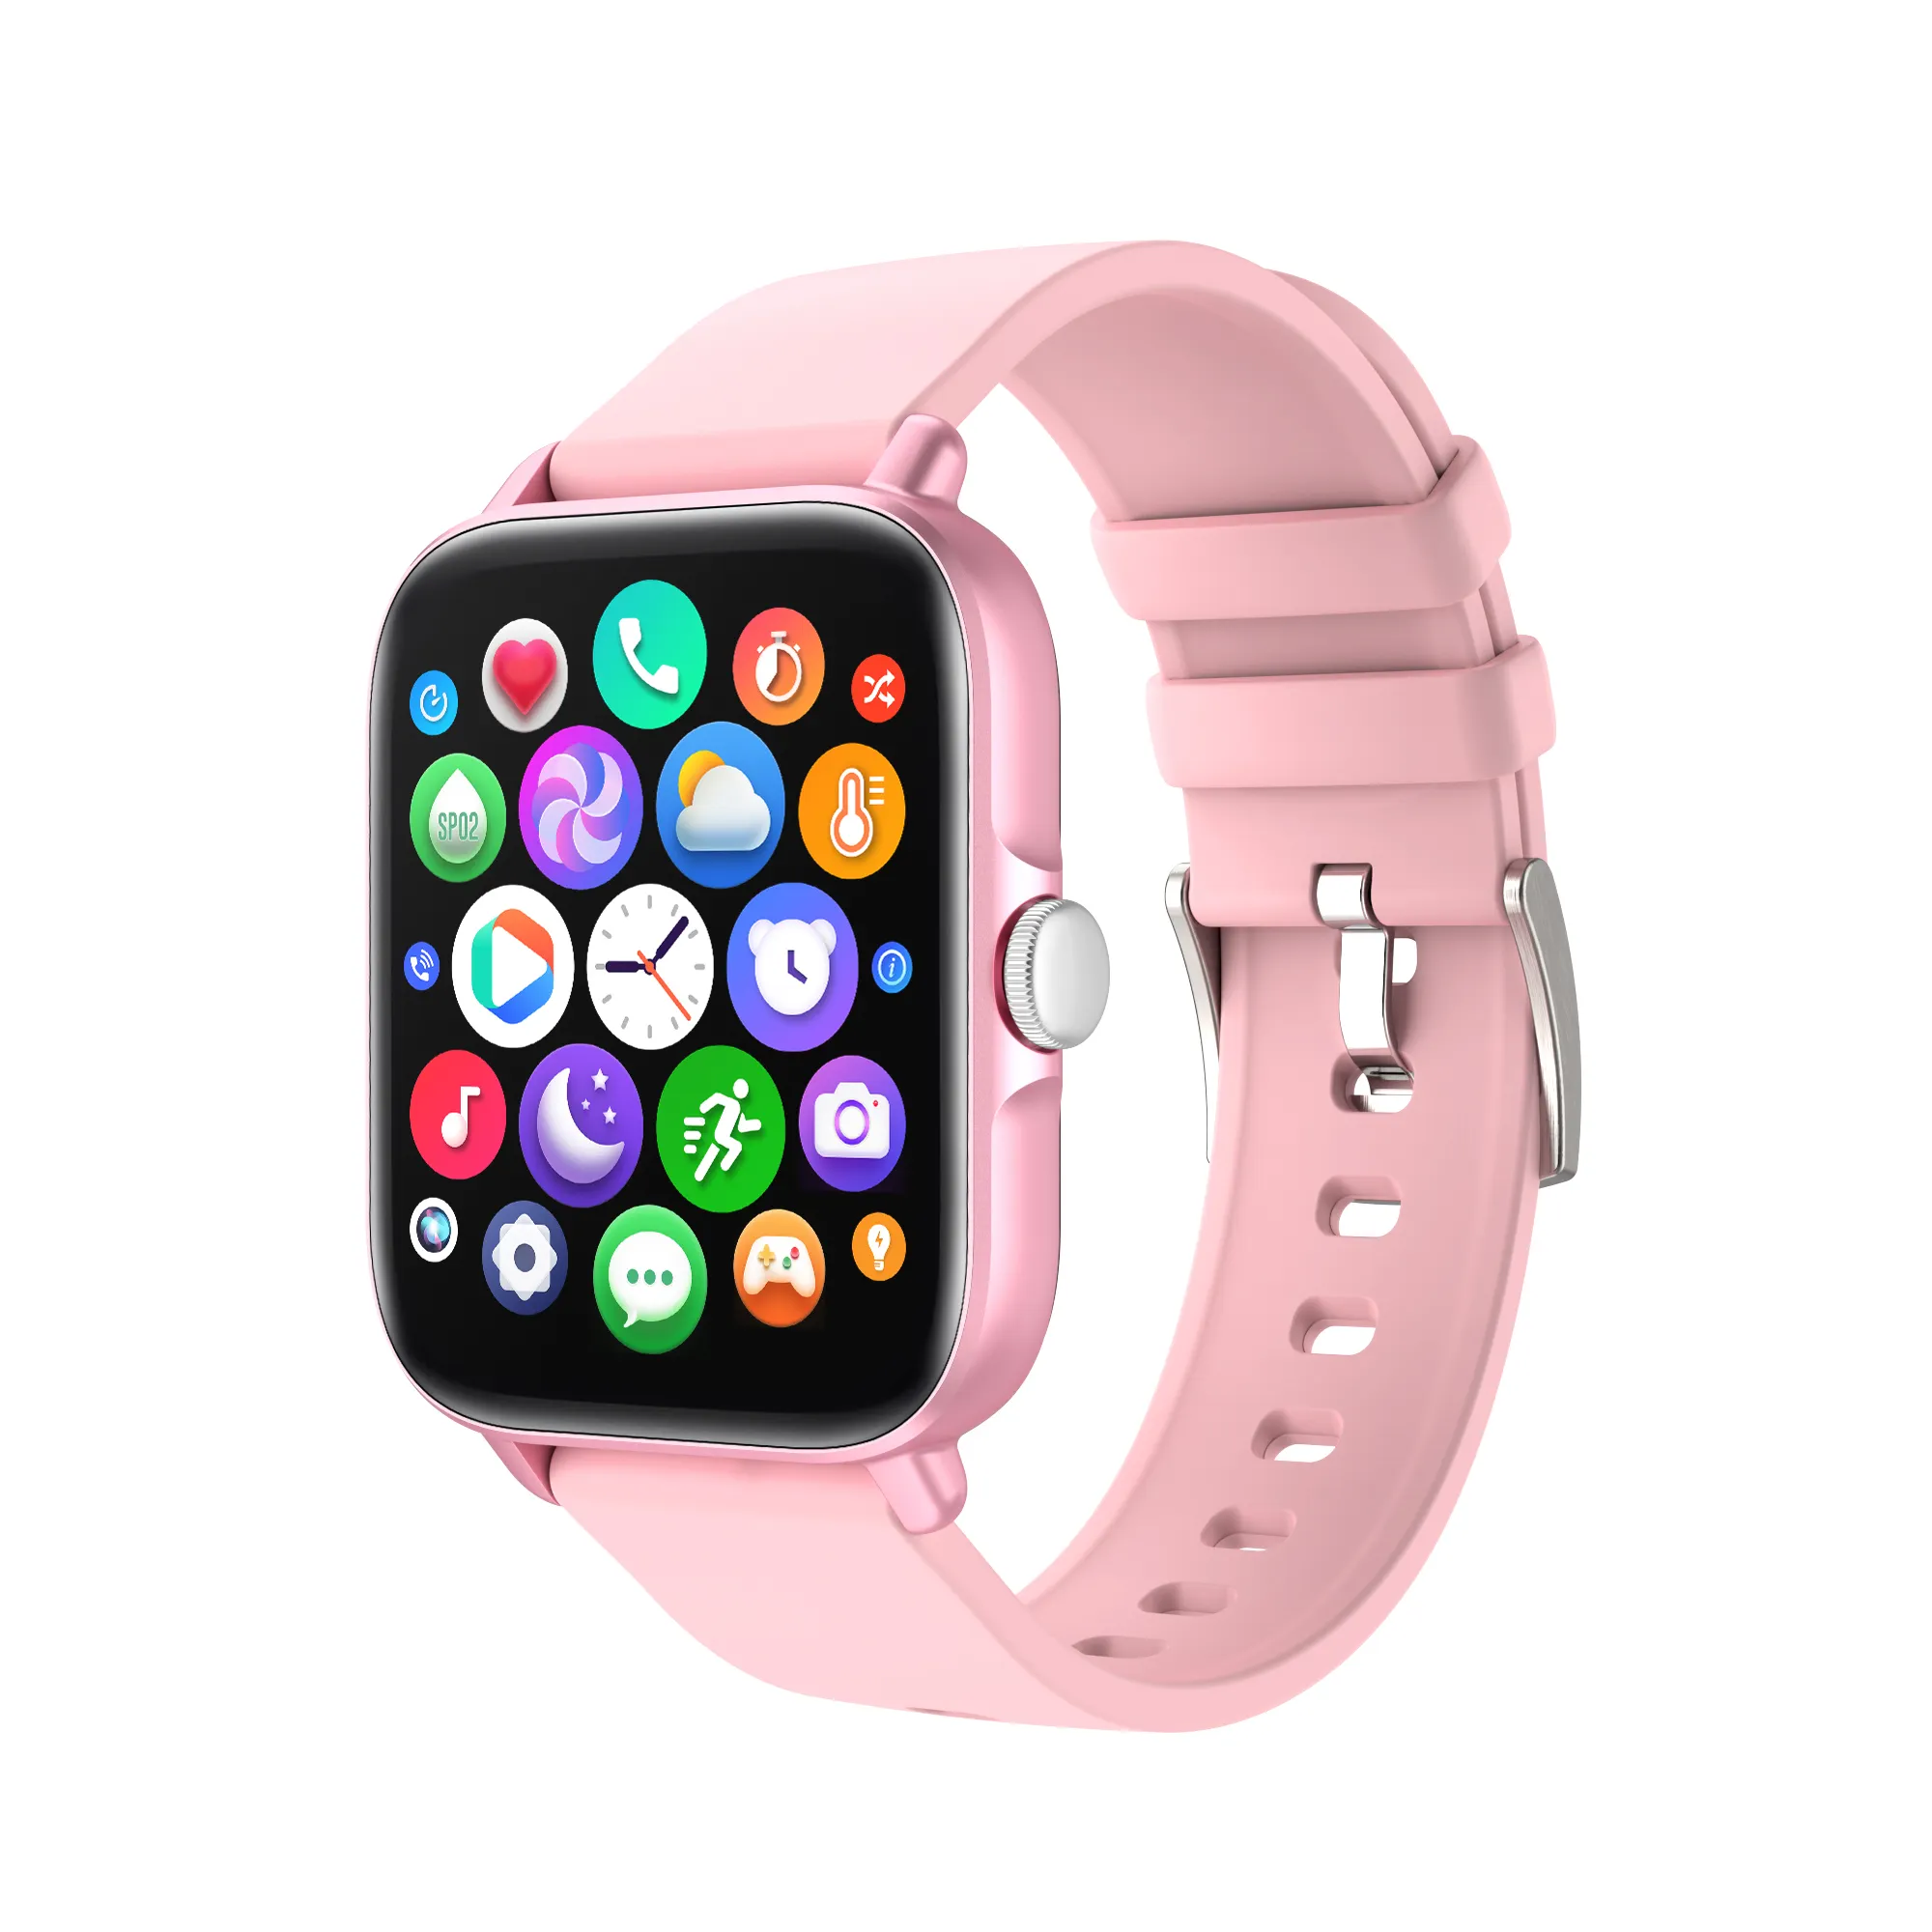 VALDUS Trending nuovo arrivo Lady Women Fashion Smart Watch Y22 cellulare Sport Watch lunga durata della batteria PK DT35 Smartwatch